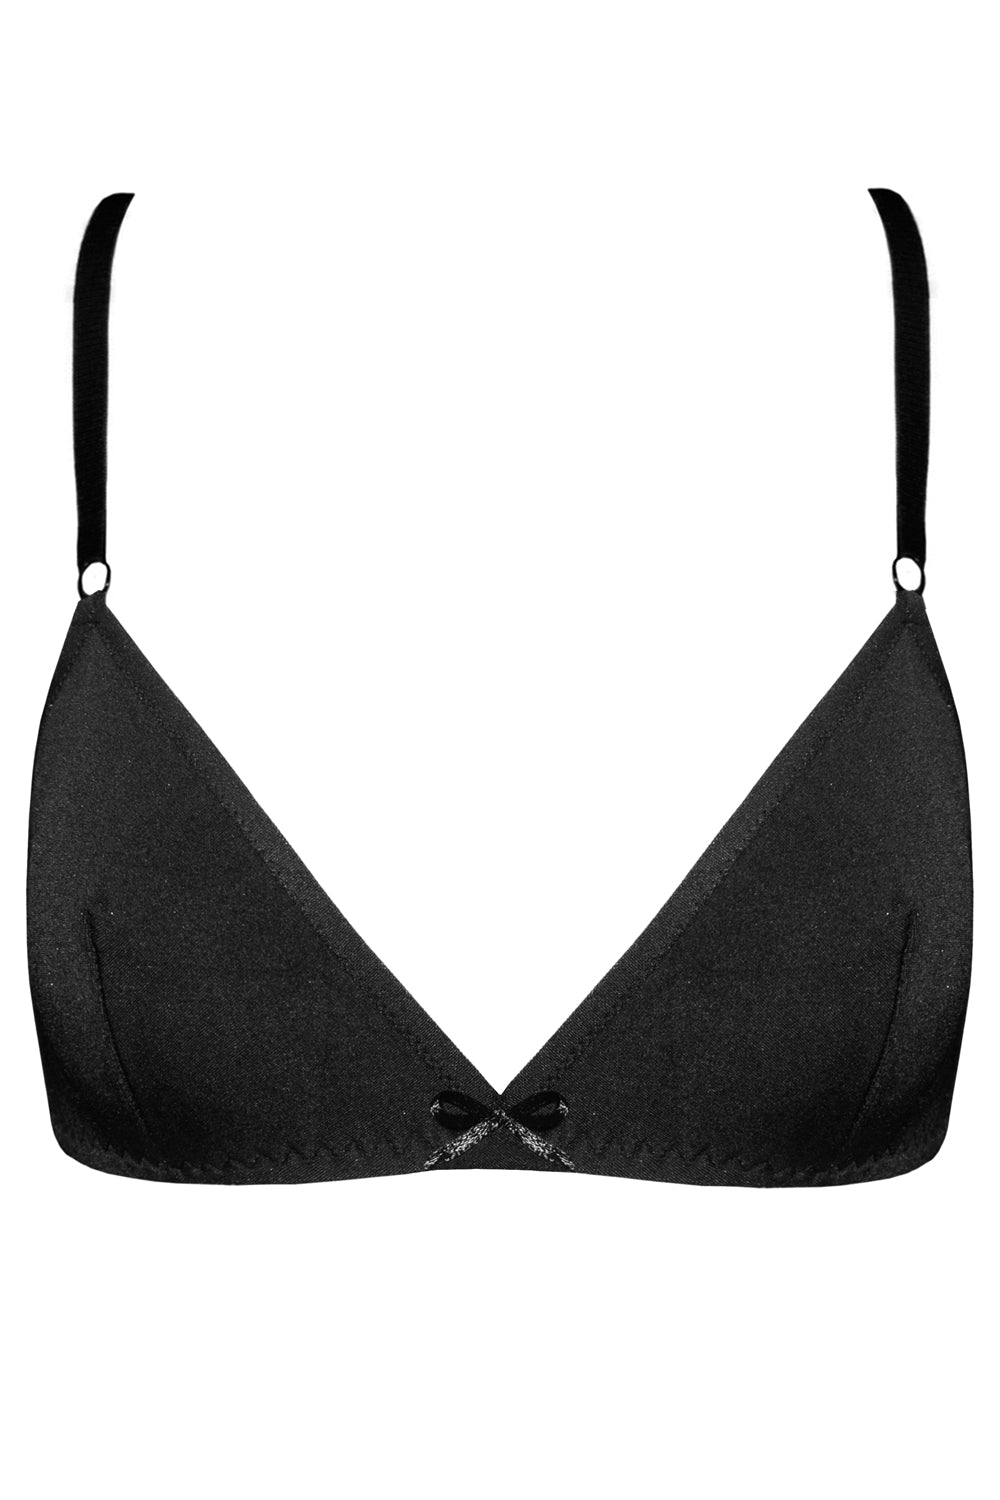 Savanna Black soft bra - Bra by bowobow. Shop on yesUndress